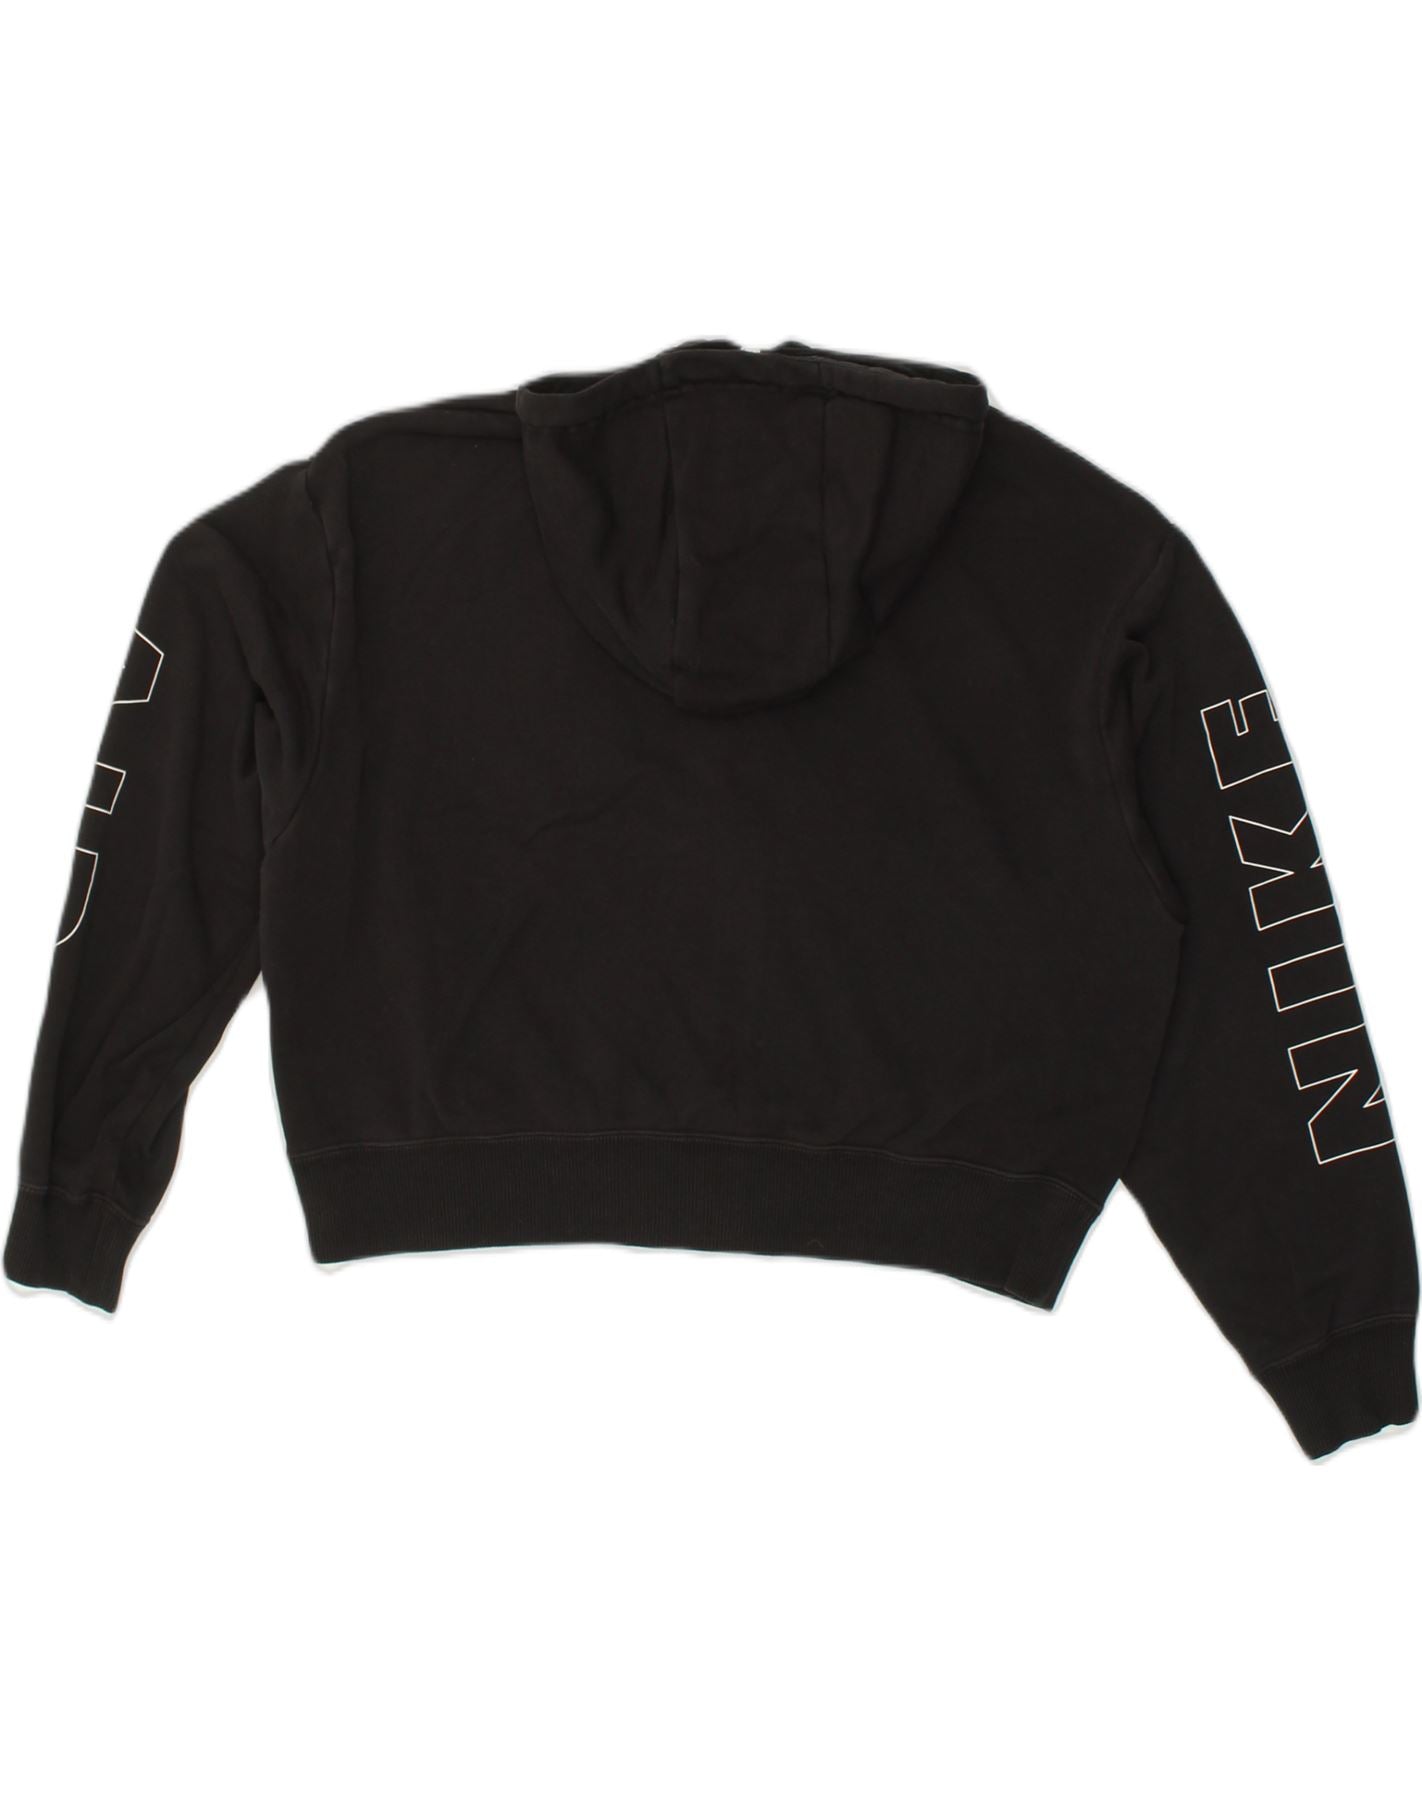 Buy Black Sweaters & Cardigans for Women by NIKE Online